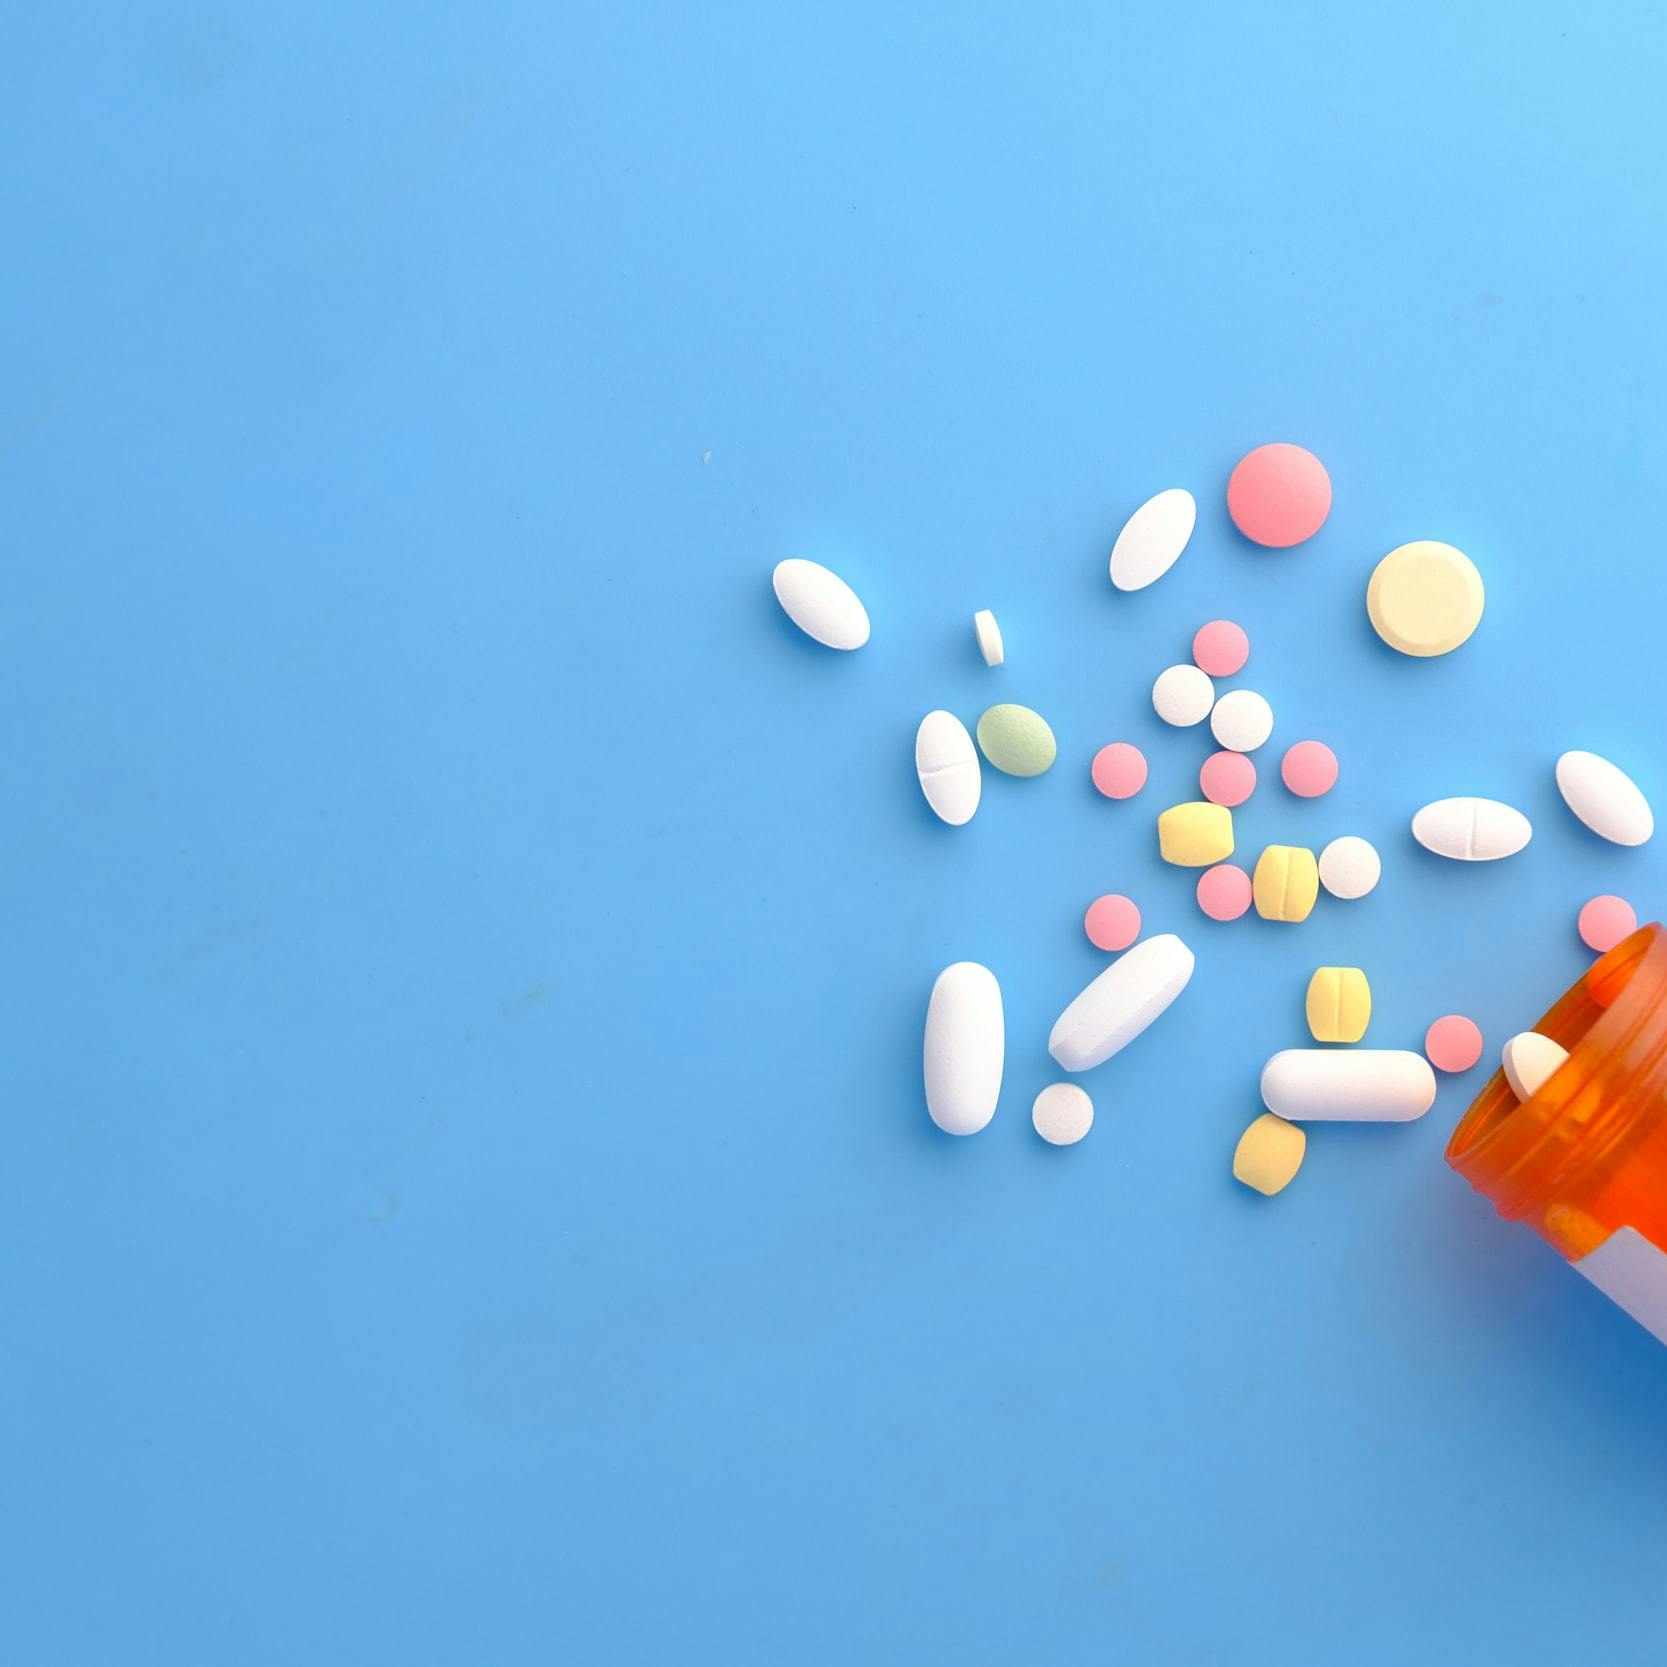 orange and white medication pill